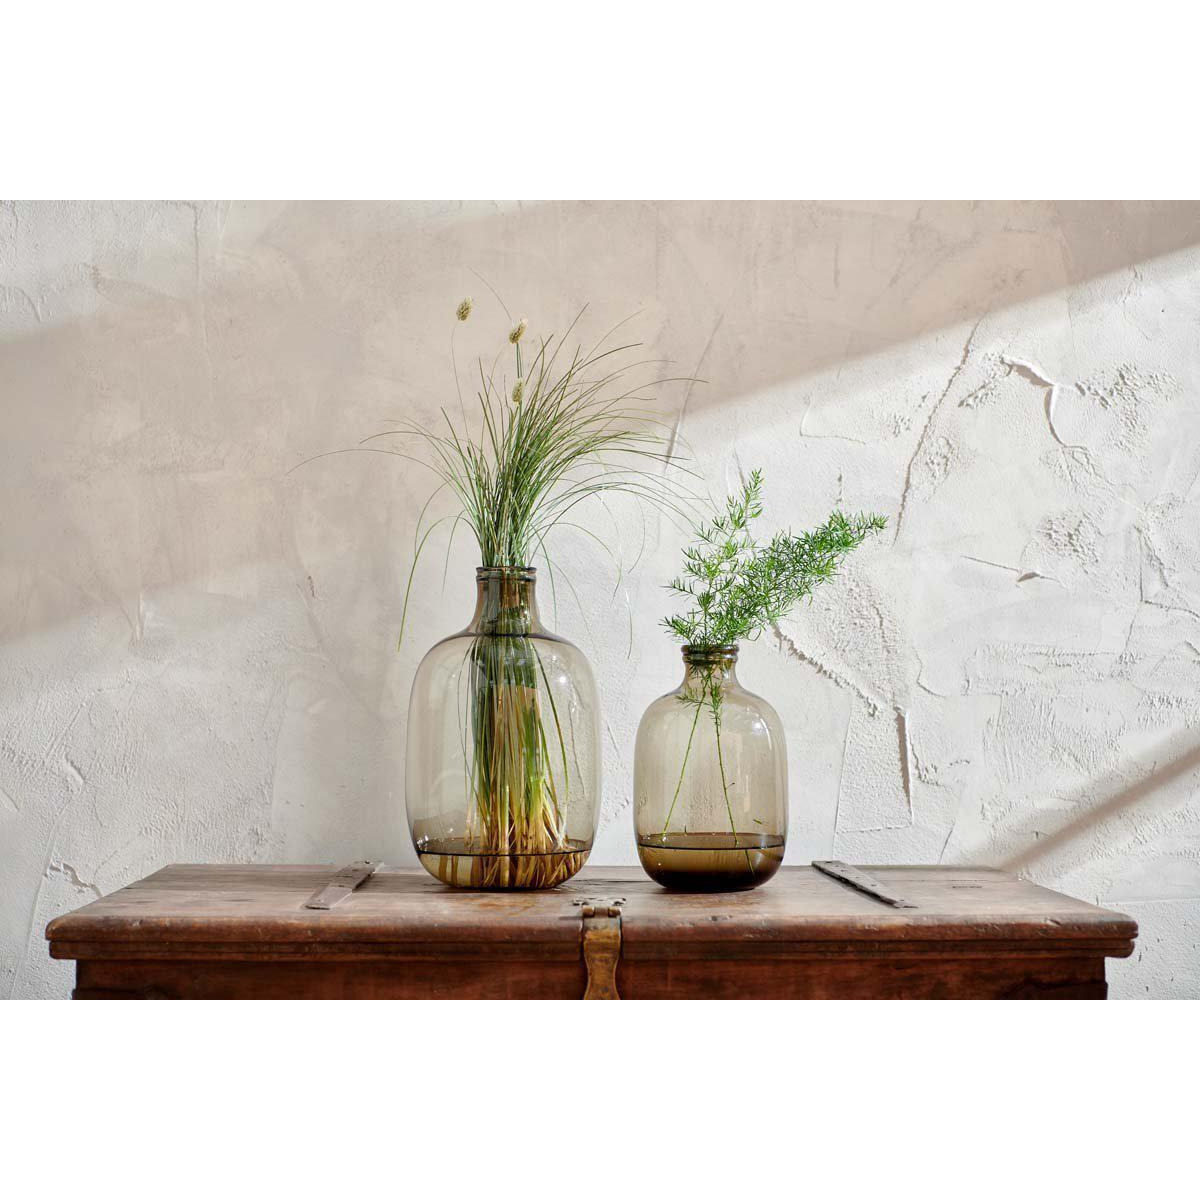 Nkuku Lua Glass Vase - Vases & Planters - Brown - Large 36 x 22 cm (Diameter)